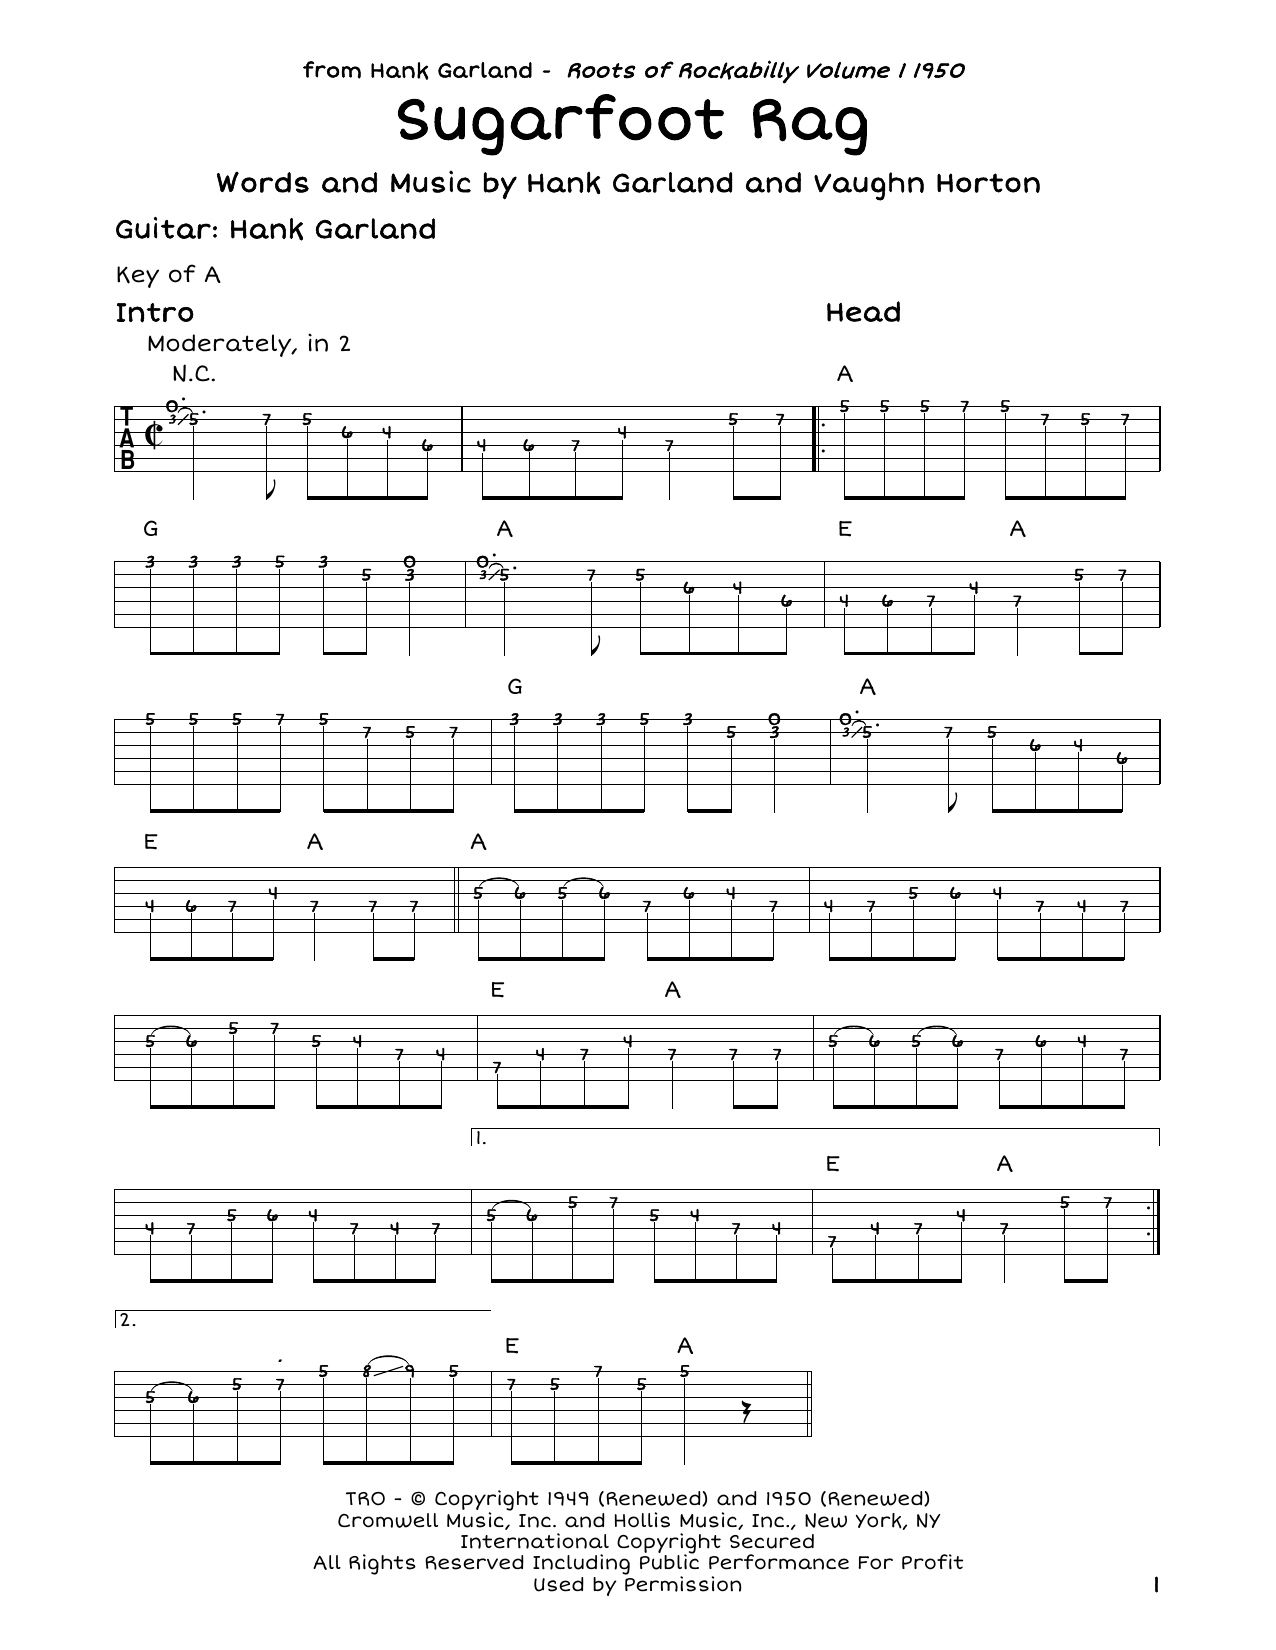 Red Foley Sugarfoot Rag Sheet Music Notes & Chords for Guitar Tab - Download or Print PDF